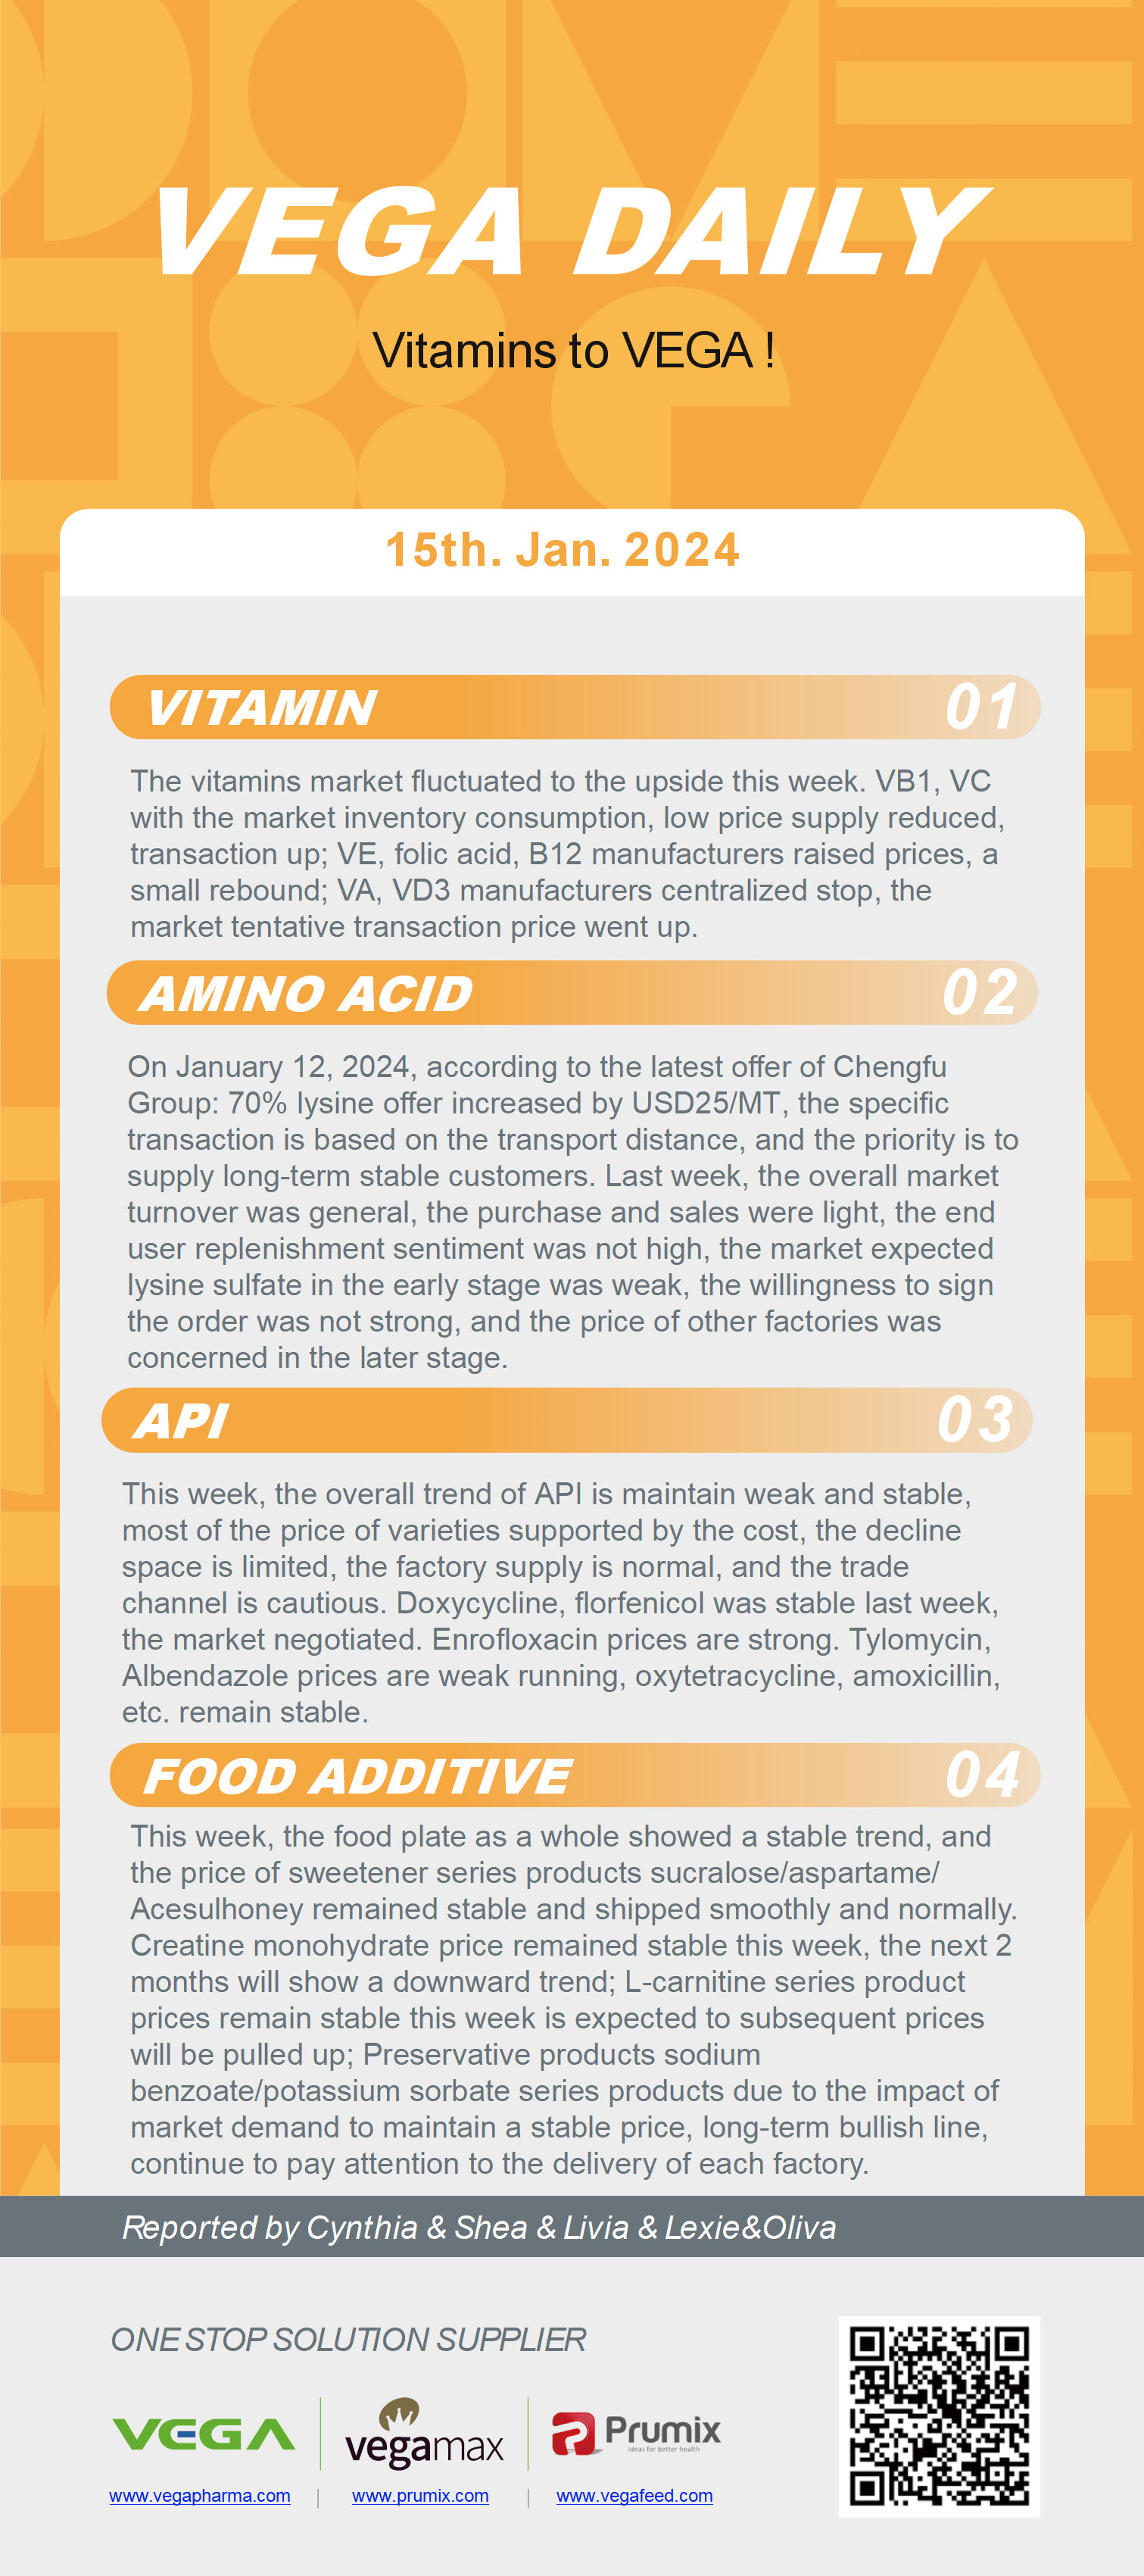 Vega Daily Dated on Jan 15th 2024 Vitamin Amino Acid APl Food Additives.png